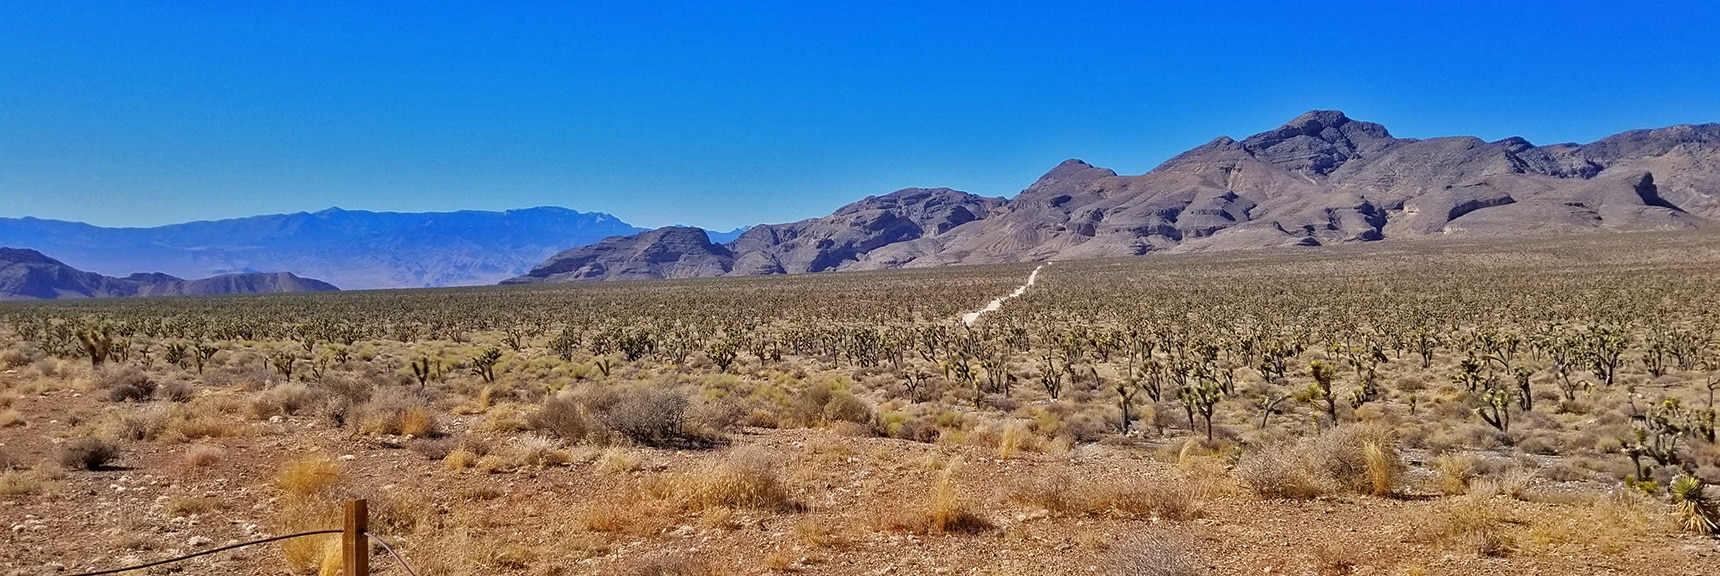 View Back Down Mormon Well Road Toward Sheep Range | Lower Mormon Well Road | Sheep Range, Desert National Wildlife Refuge, Nevada